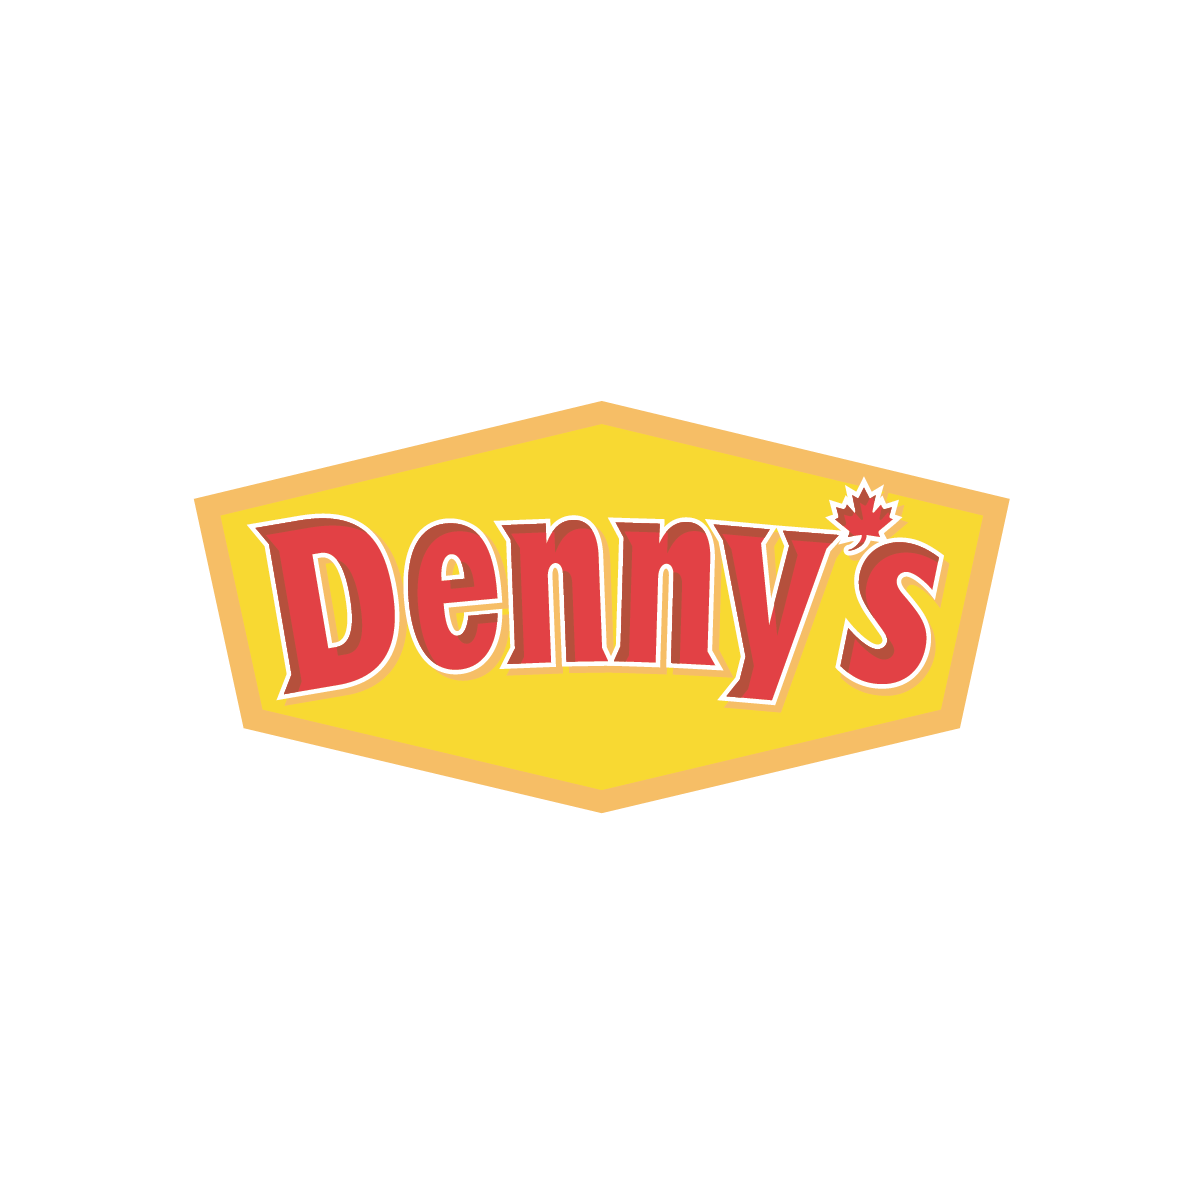 Denny's Canada